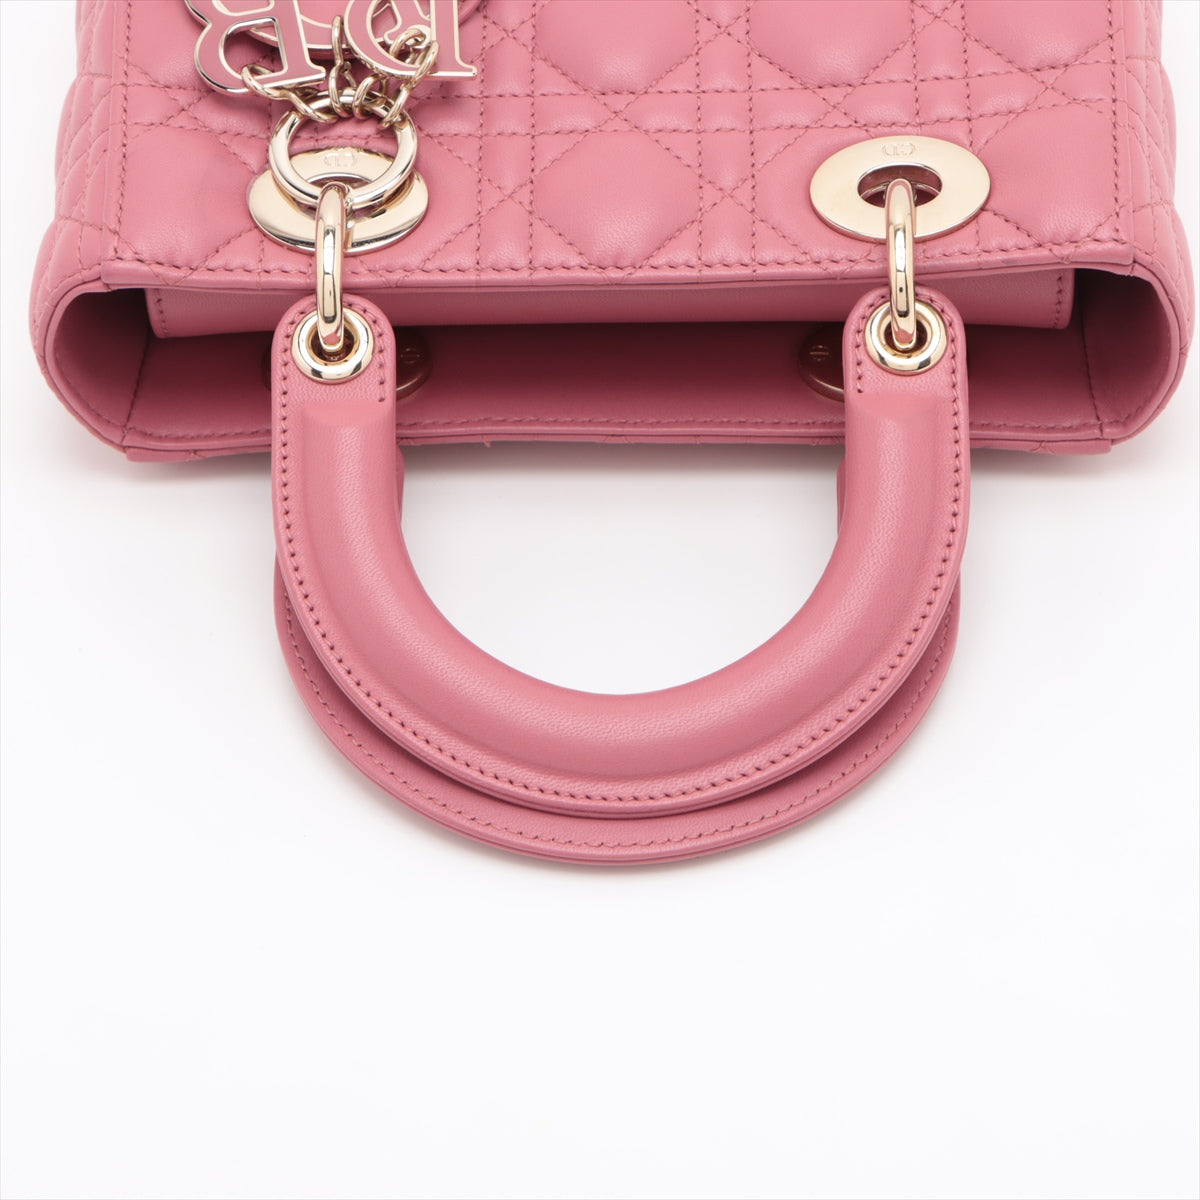 Christian Dior My Lady Dior Cannage Leather 2way handbag Pink